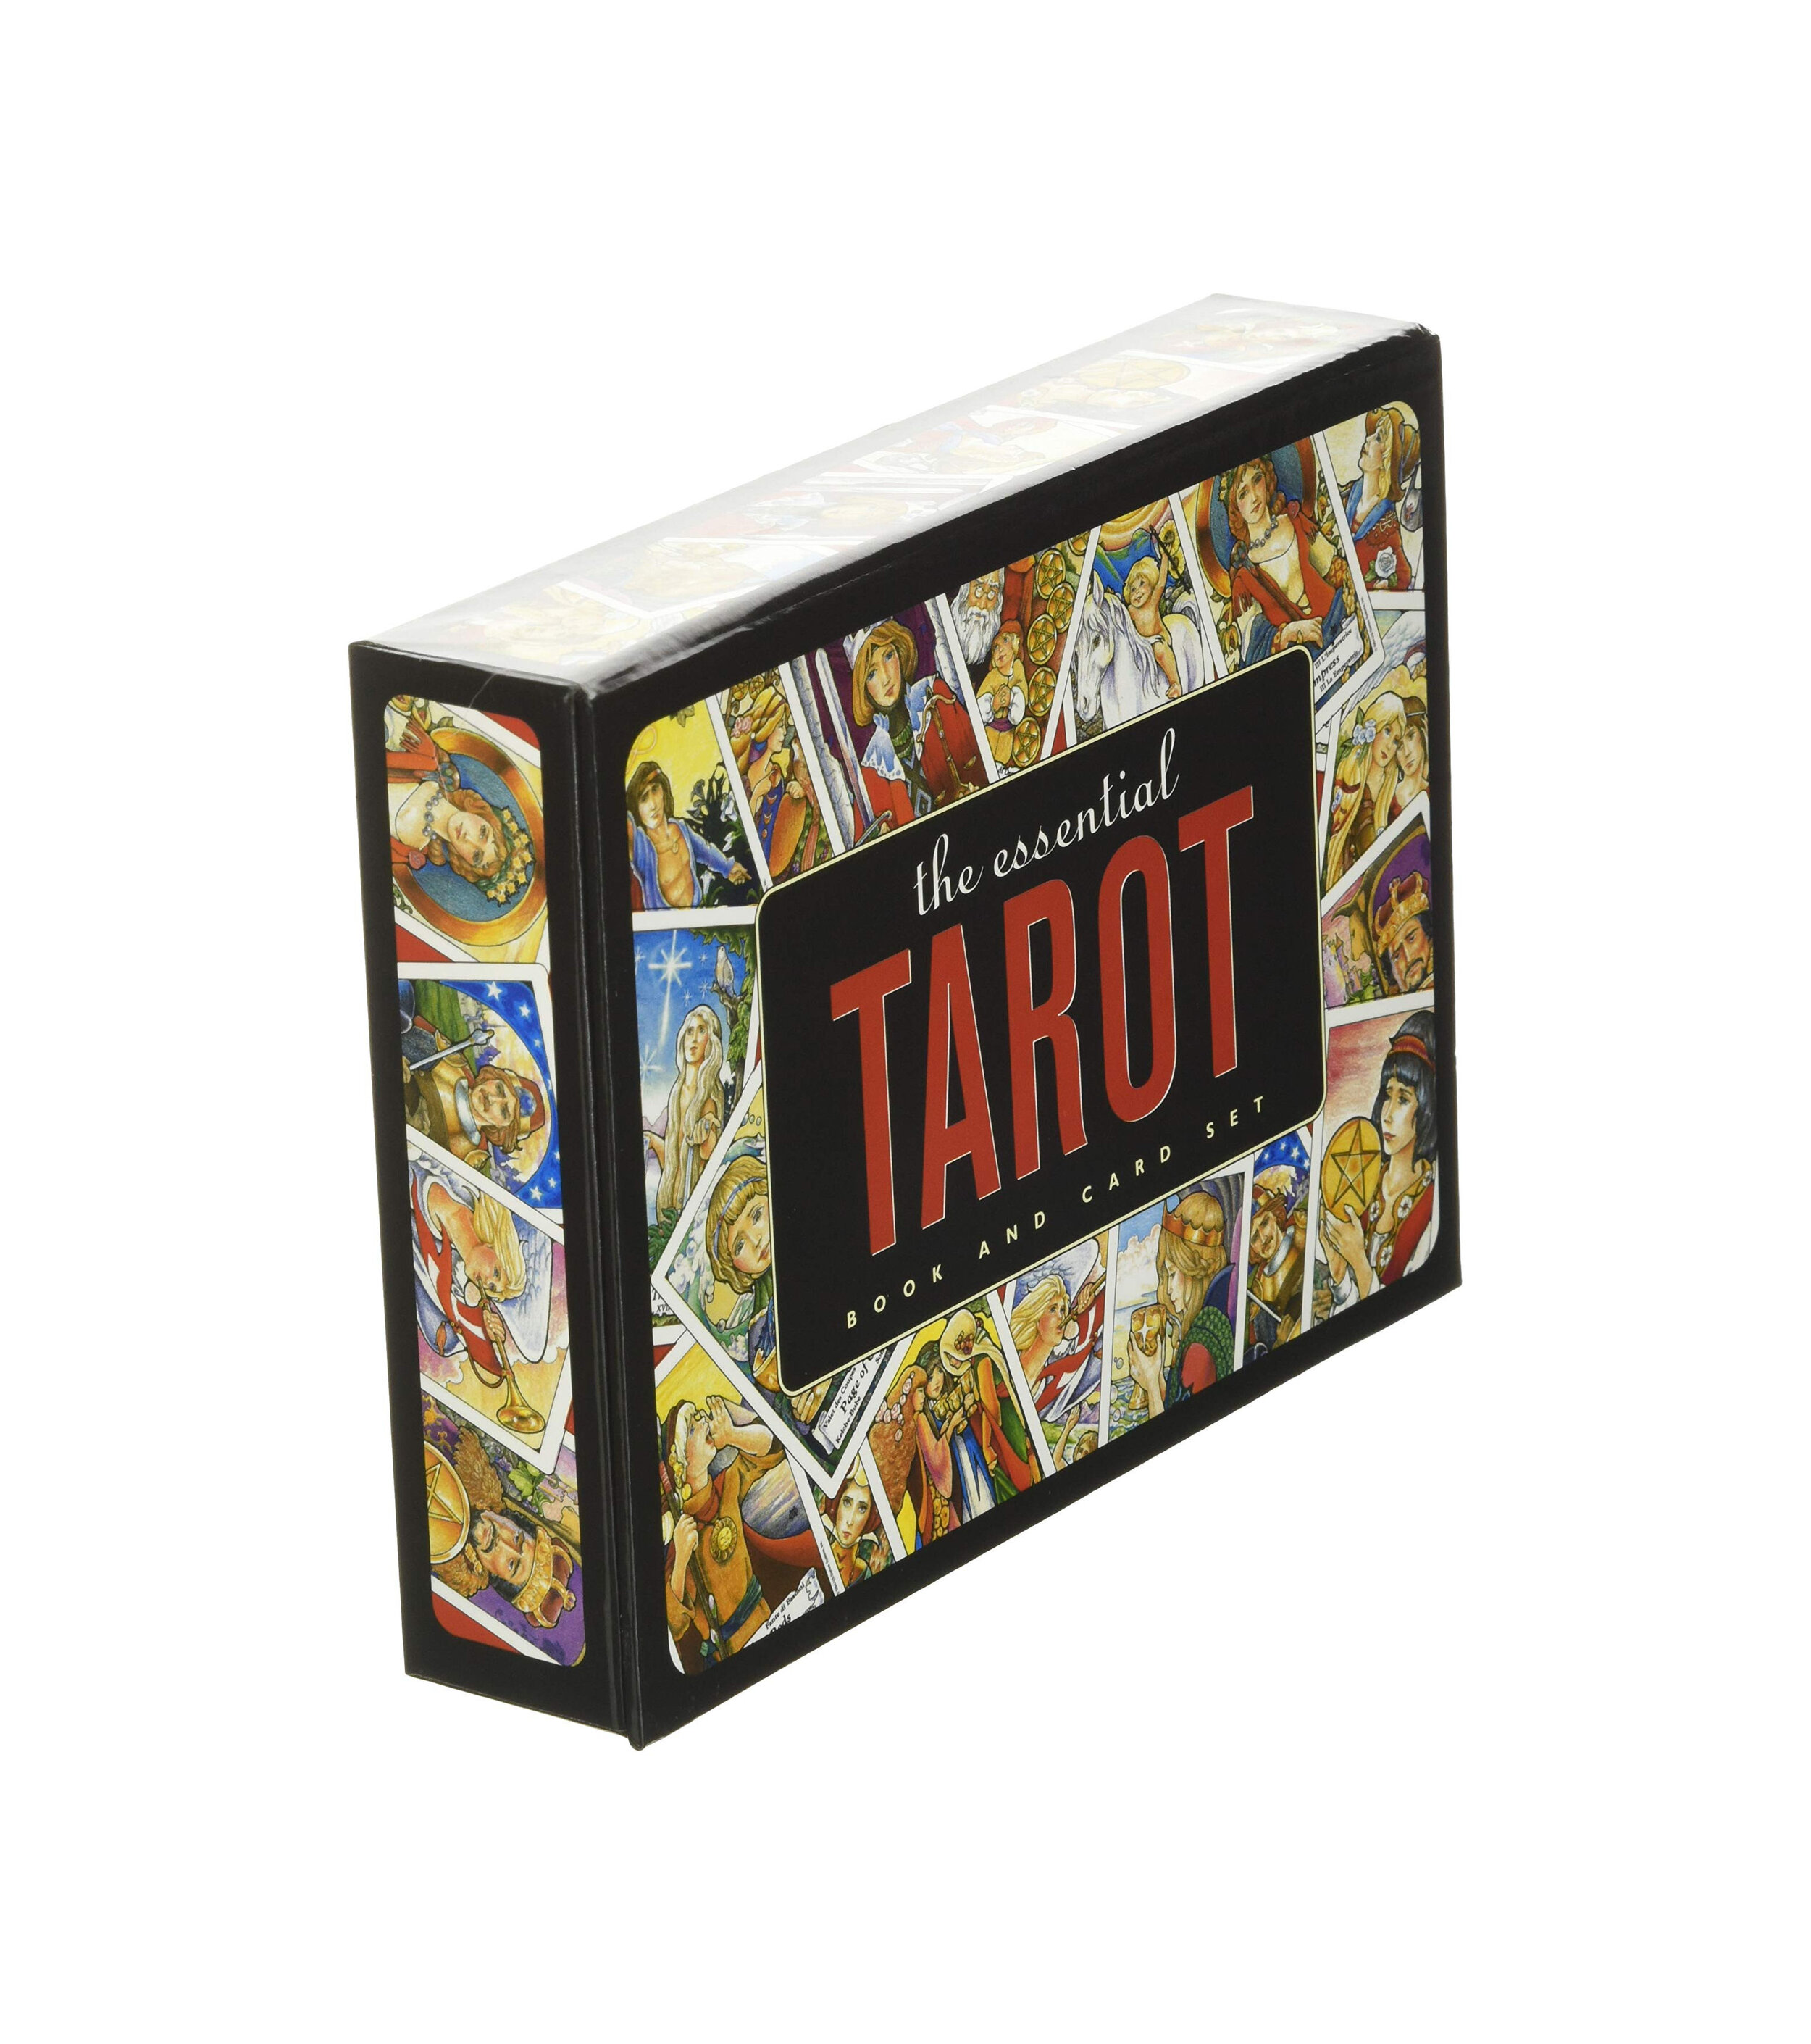 The Essential Tarot by Chloé Zarka Grinsnir